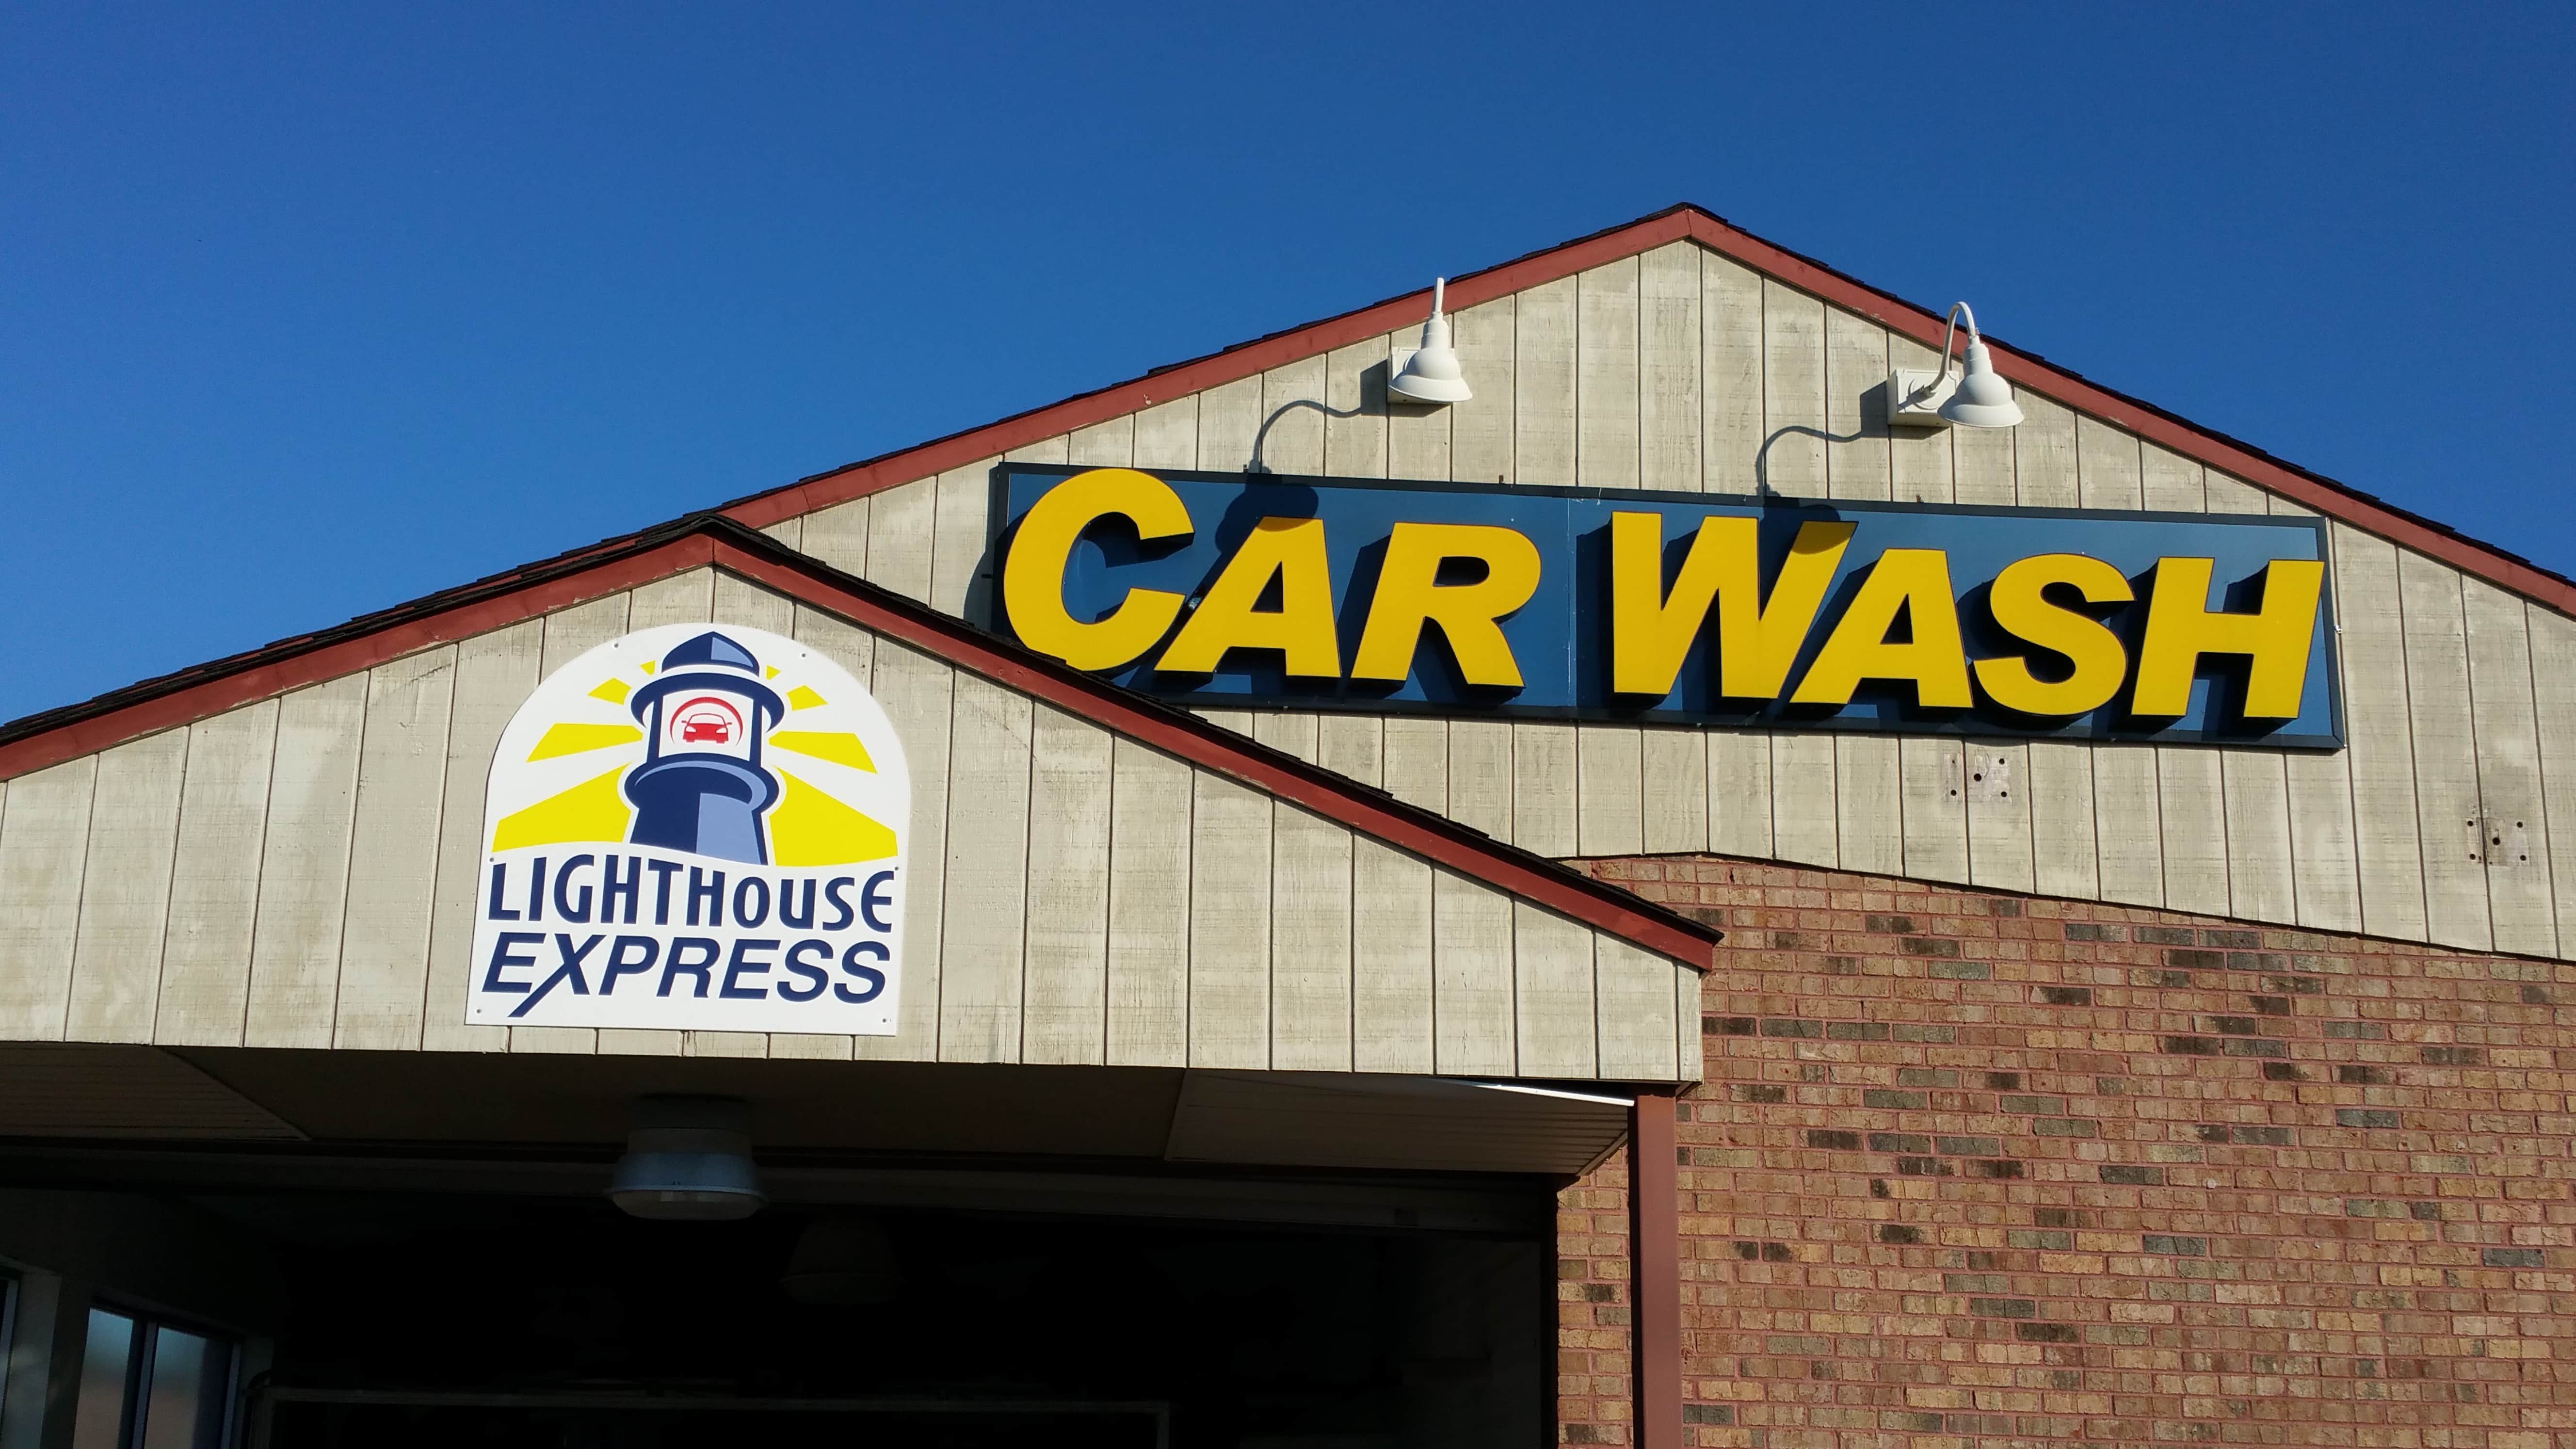 Lighthouse Express Car Wash - Lawrenceville, GA, US, car wash